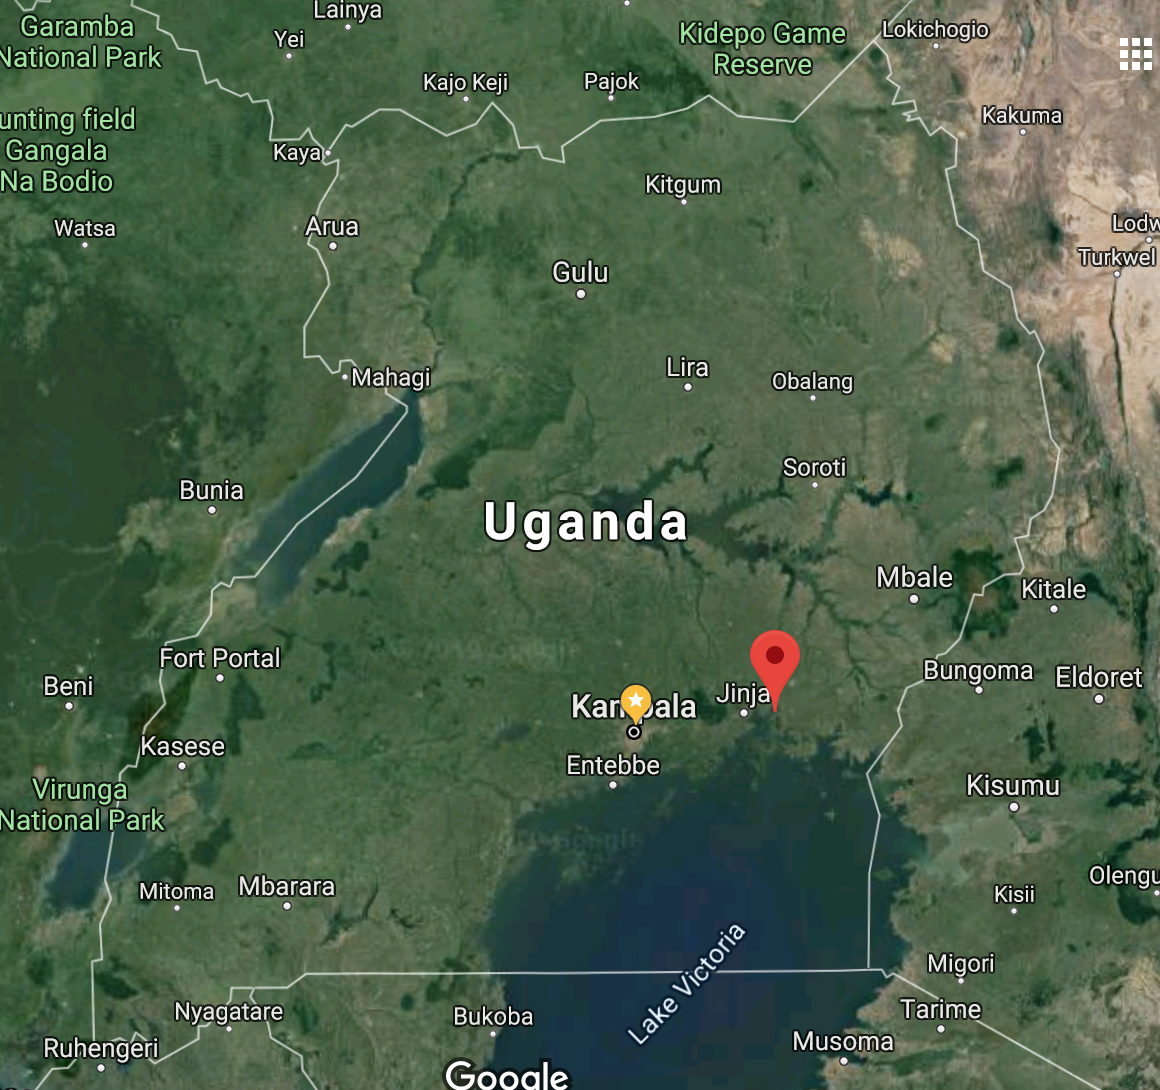 Location of Bukaleba Forest Reserve in southeastern Uganda. Source: Google Maps. Image courtesy of InfoNile.